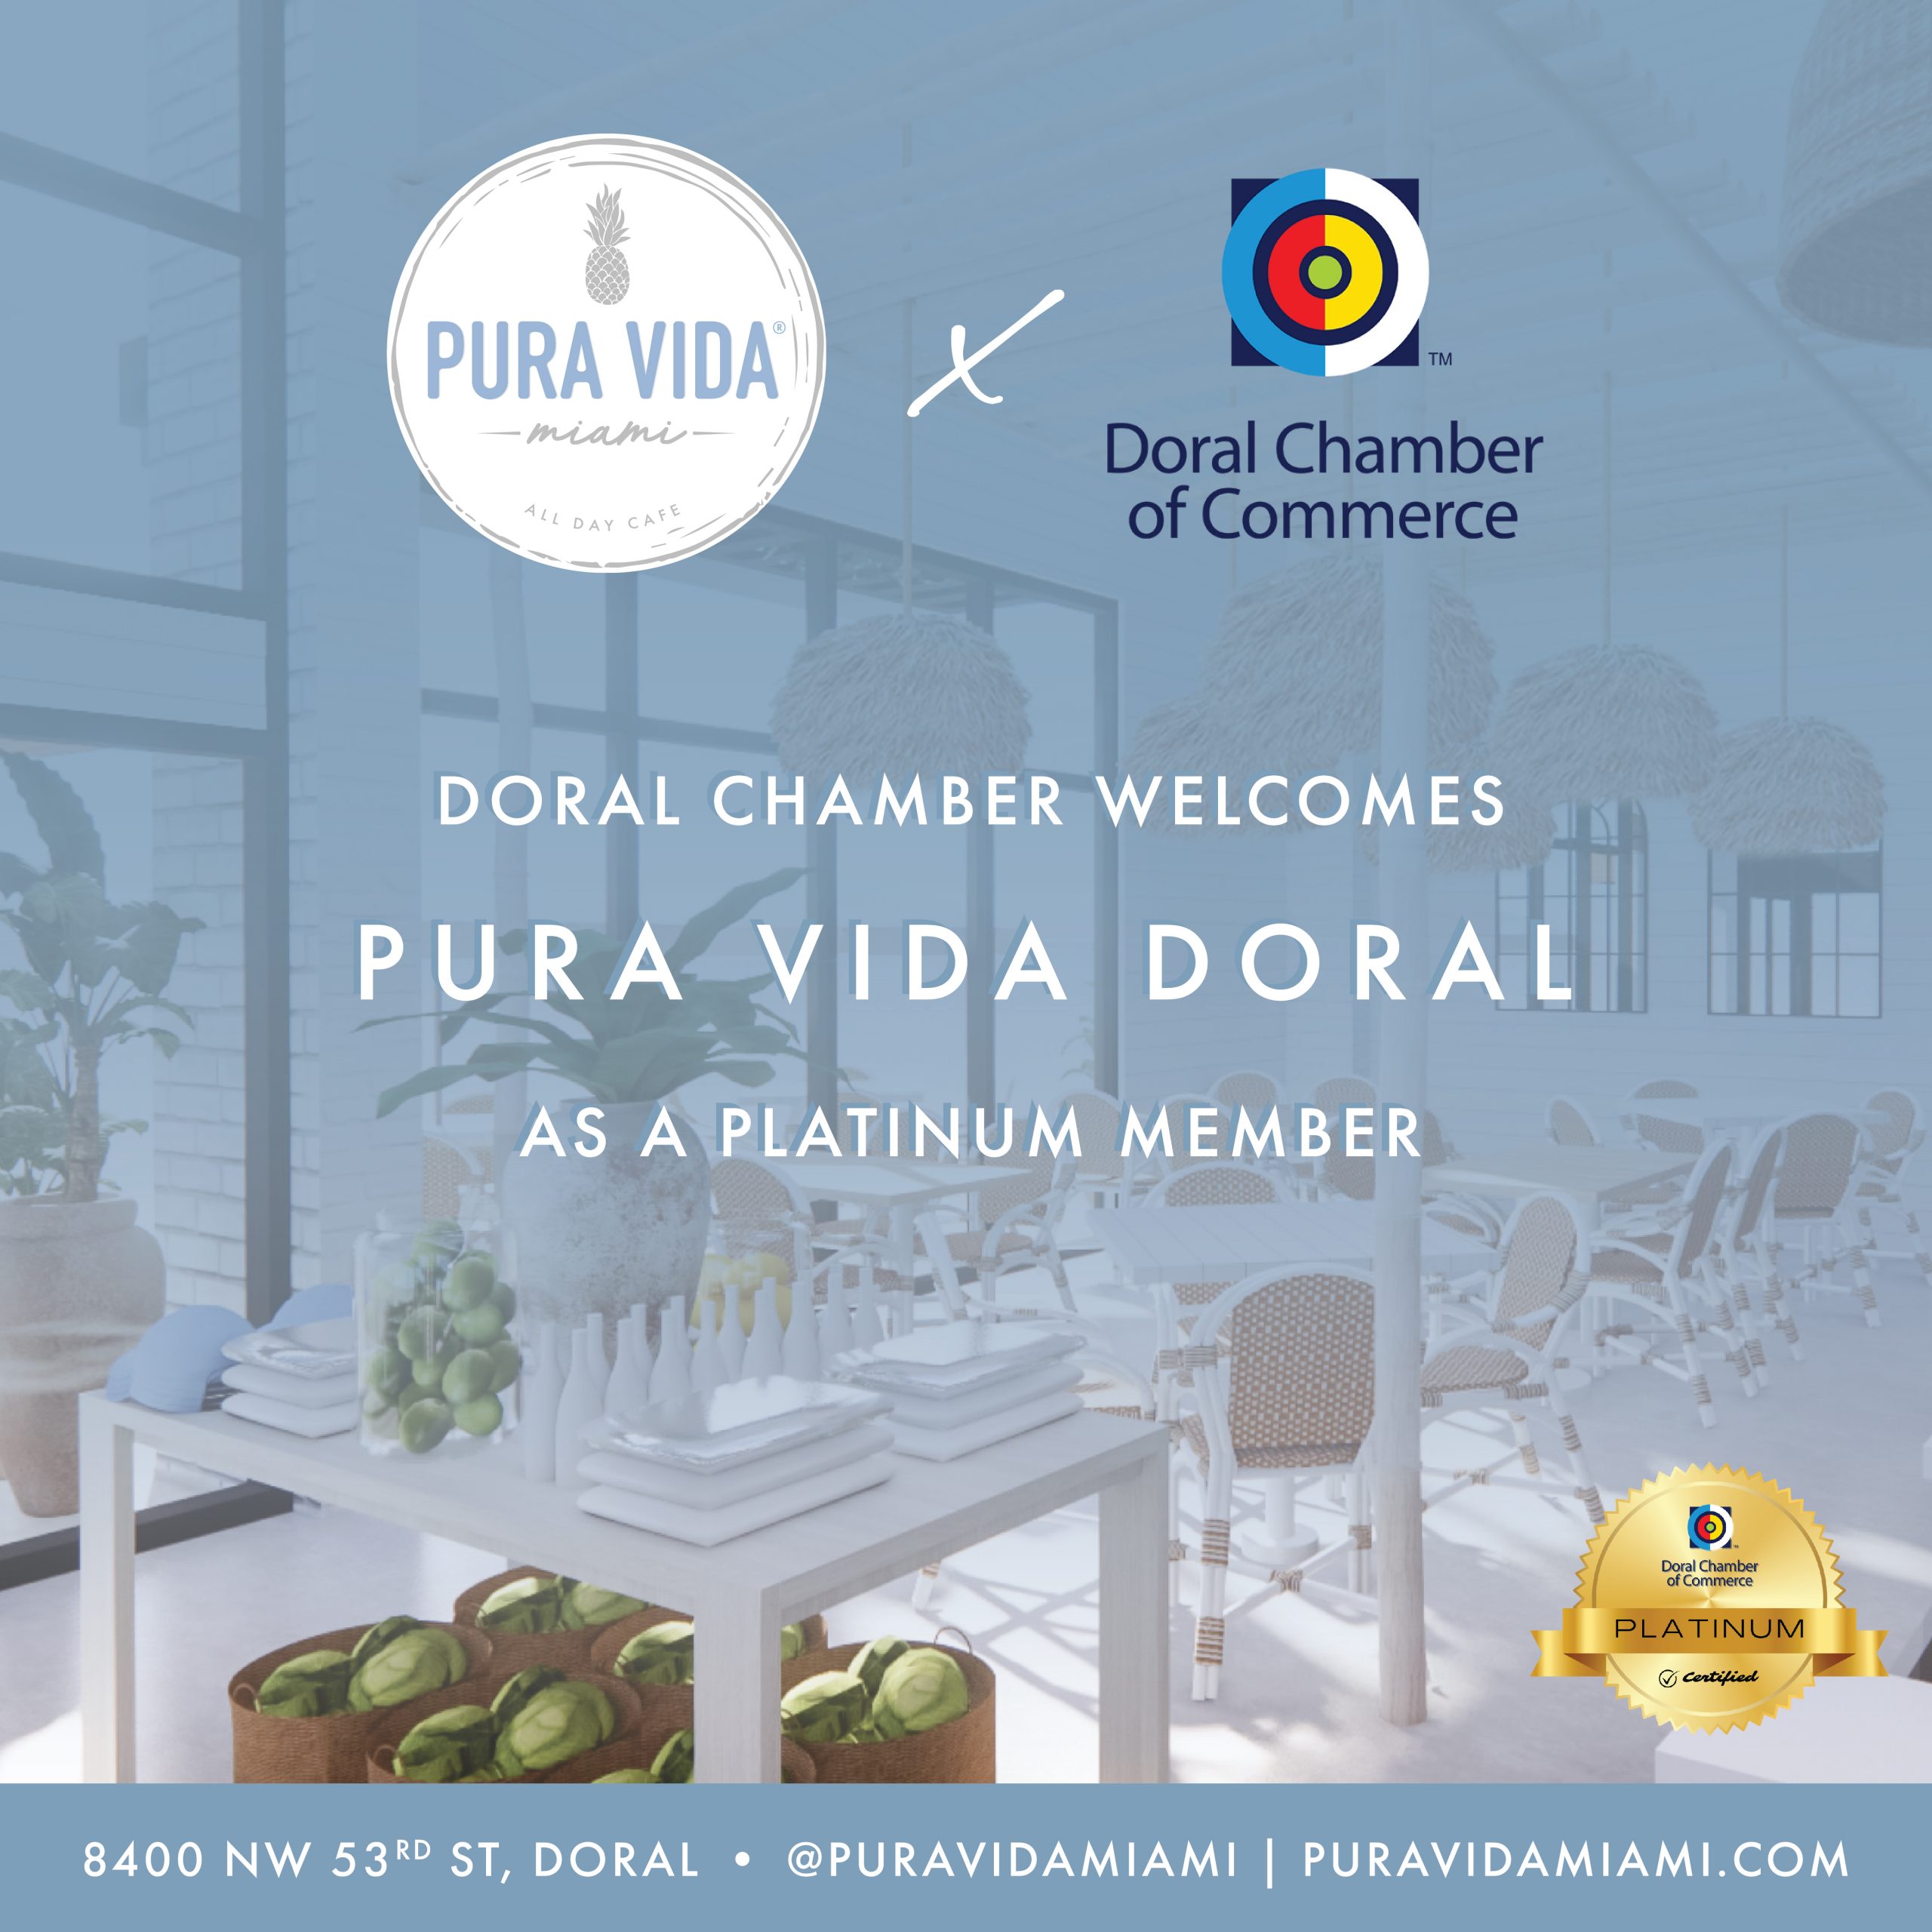 Doral Chamber of Commerce Welcomes Pura Vida Doral as a Platinum Member